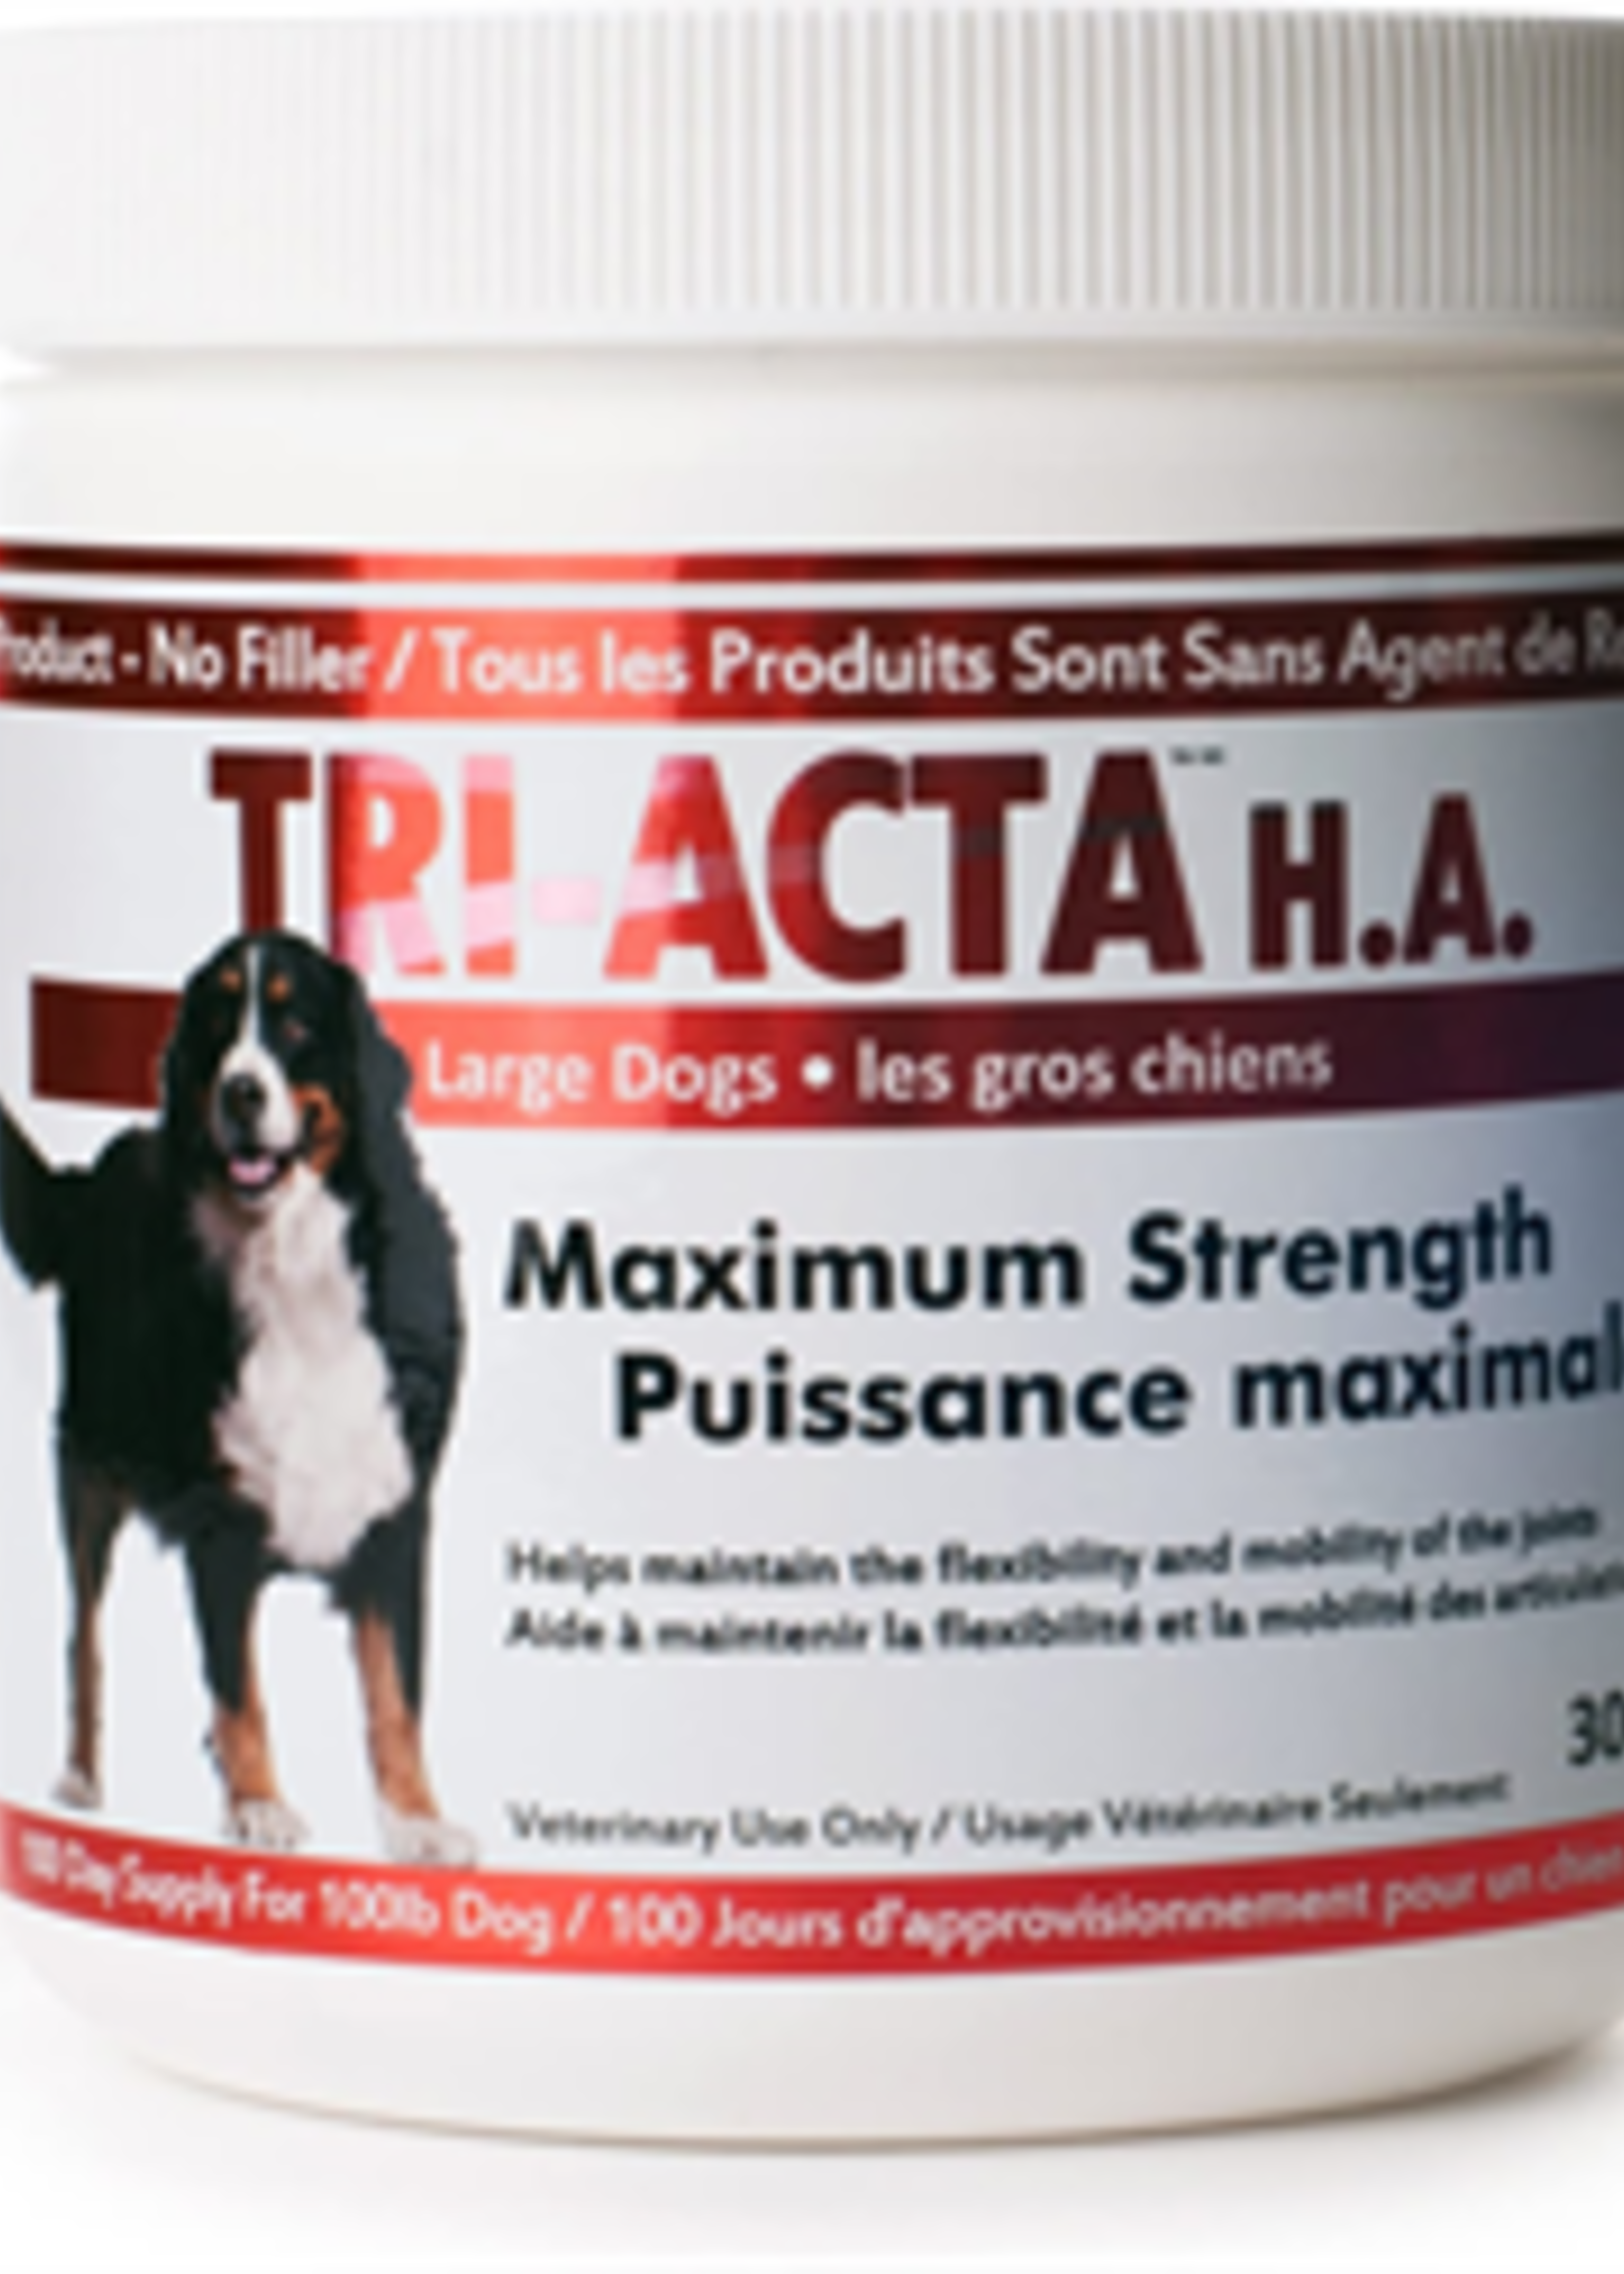 Integricare Tri-Acta™ H.A. Maximum Strength 300g